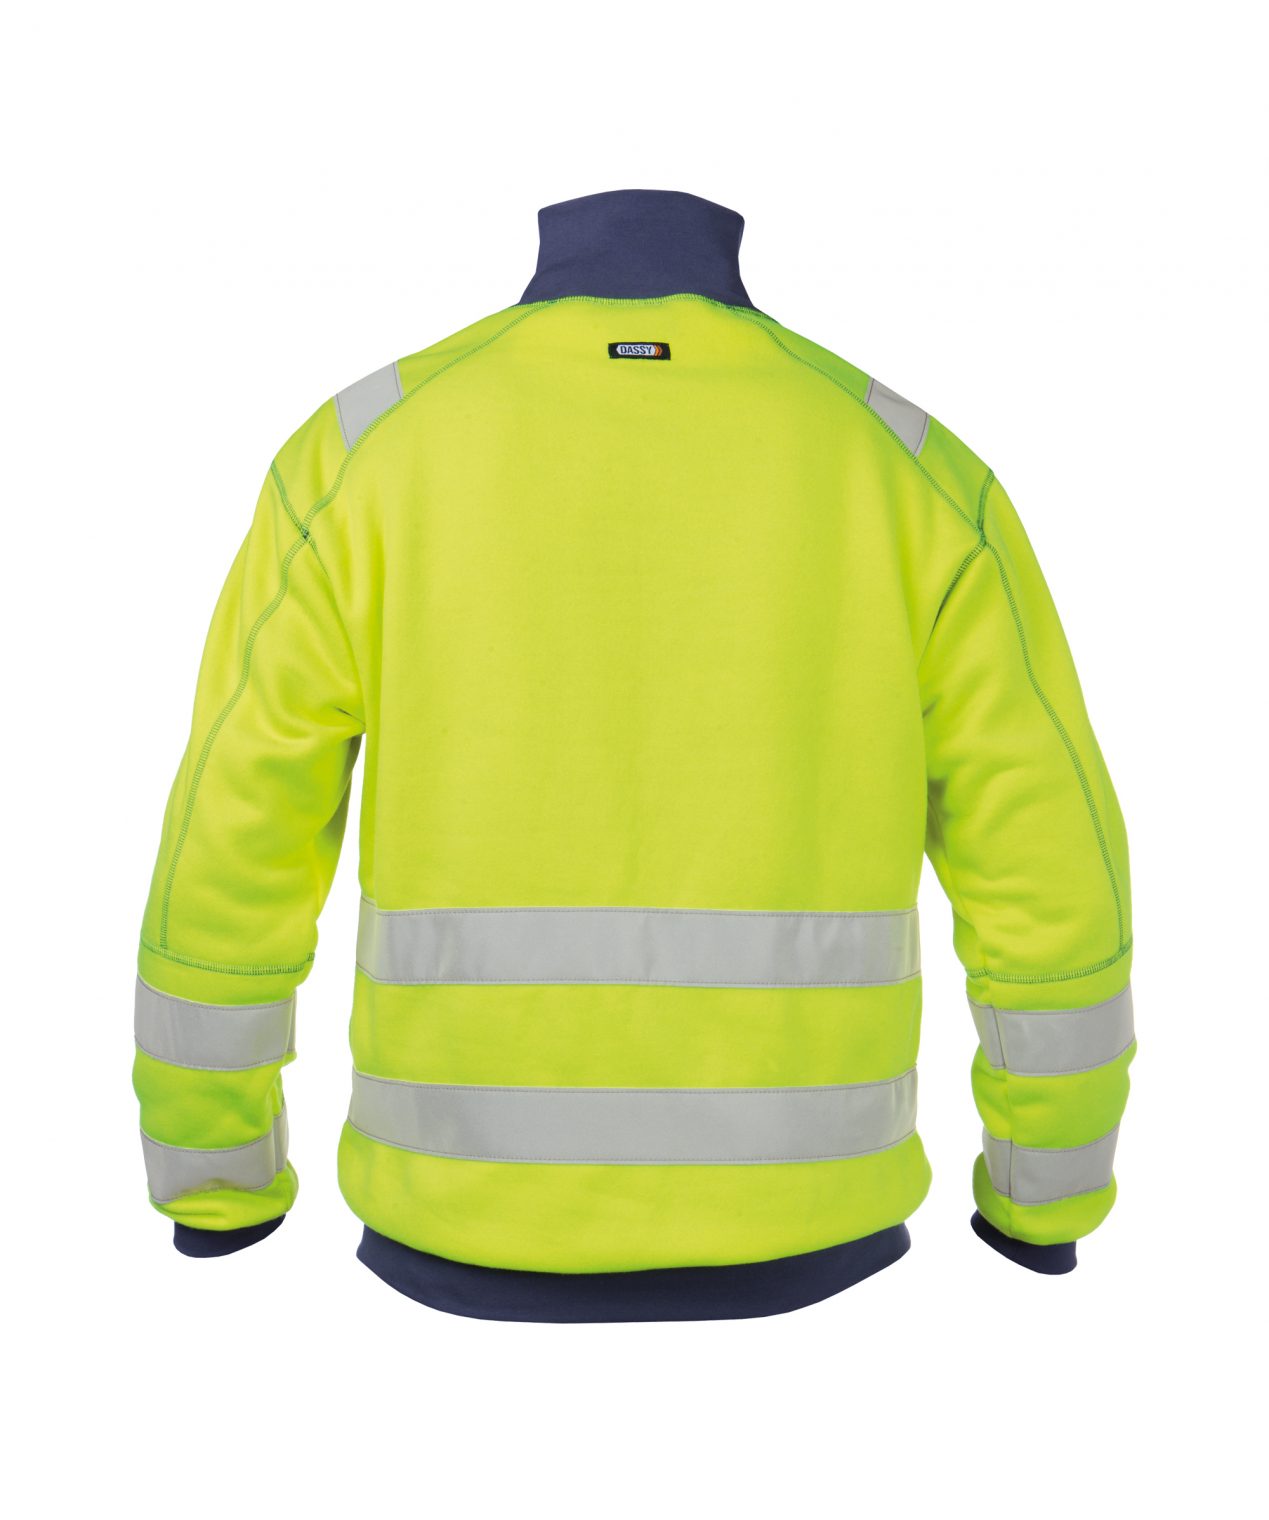 denver high visibility sweatshirt fluo yellow navy back